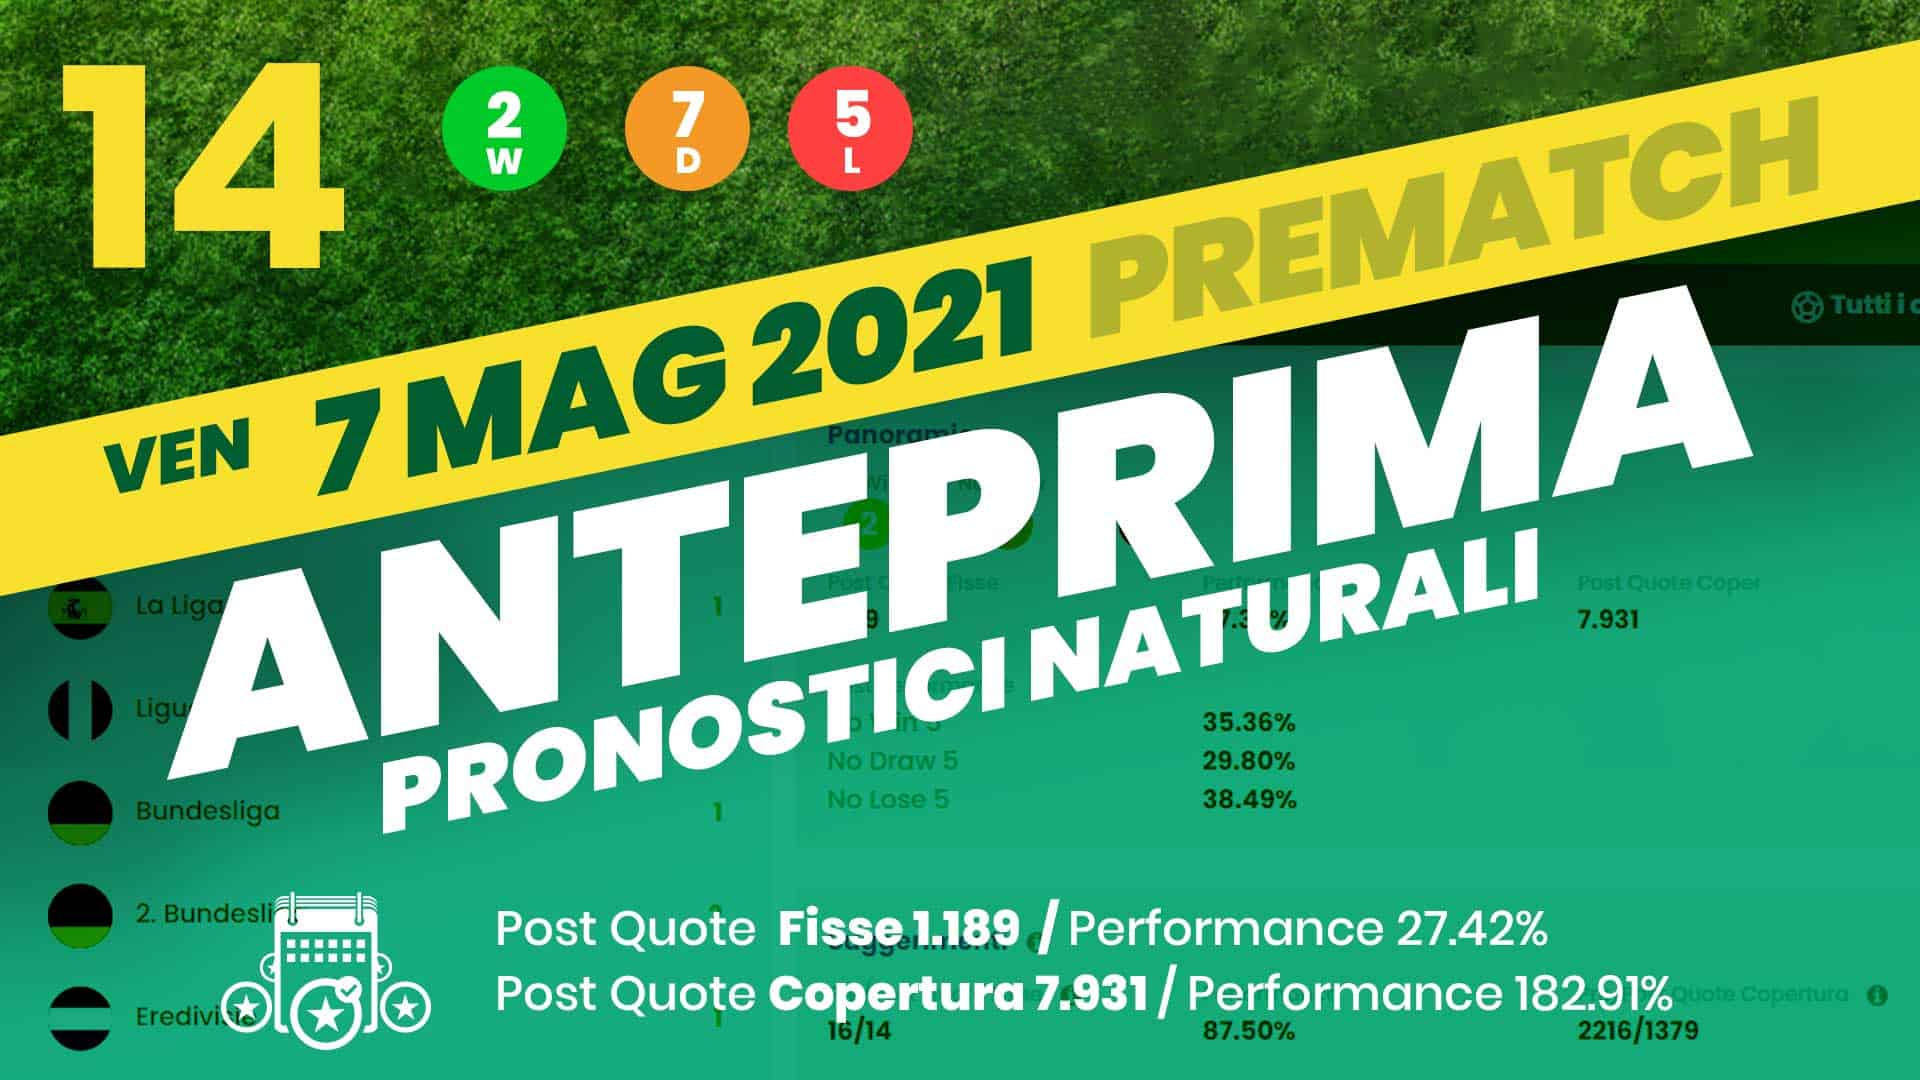 Pronostici Naturali Analisi Pre Partite Betting Scommesse Venerdi 7 Mag 2021